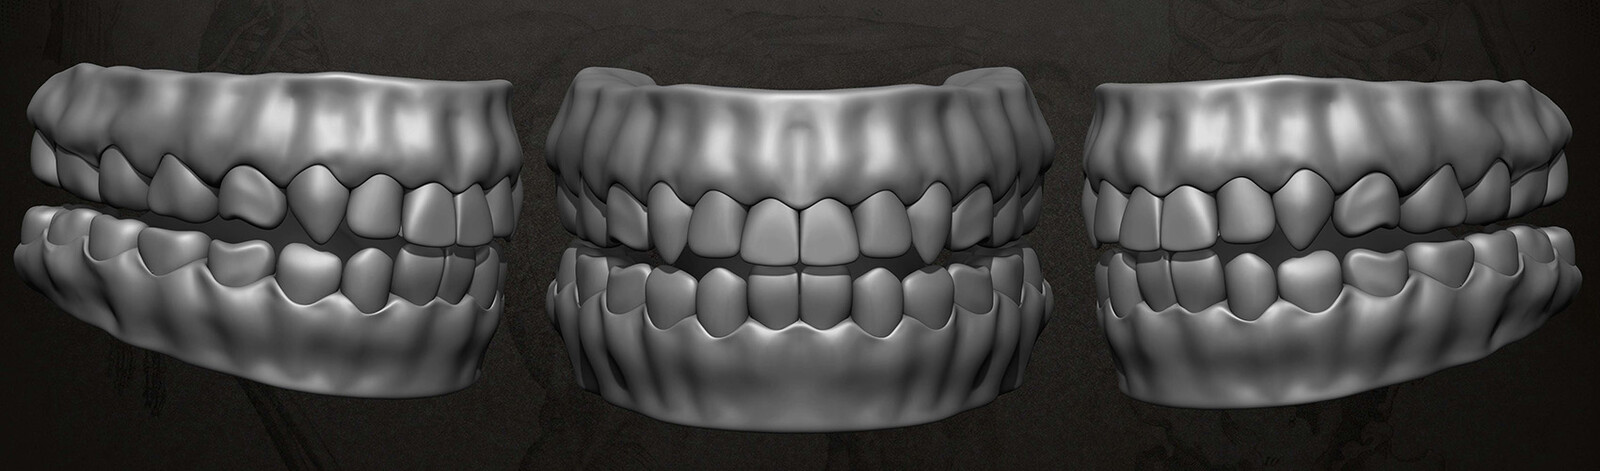 Highly Detailed Human Teeth sculpted by Yacine BRINIS 002